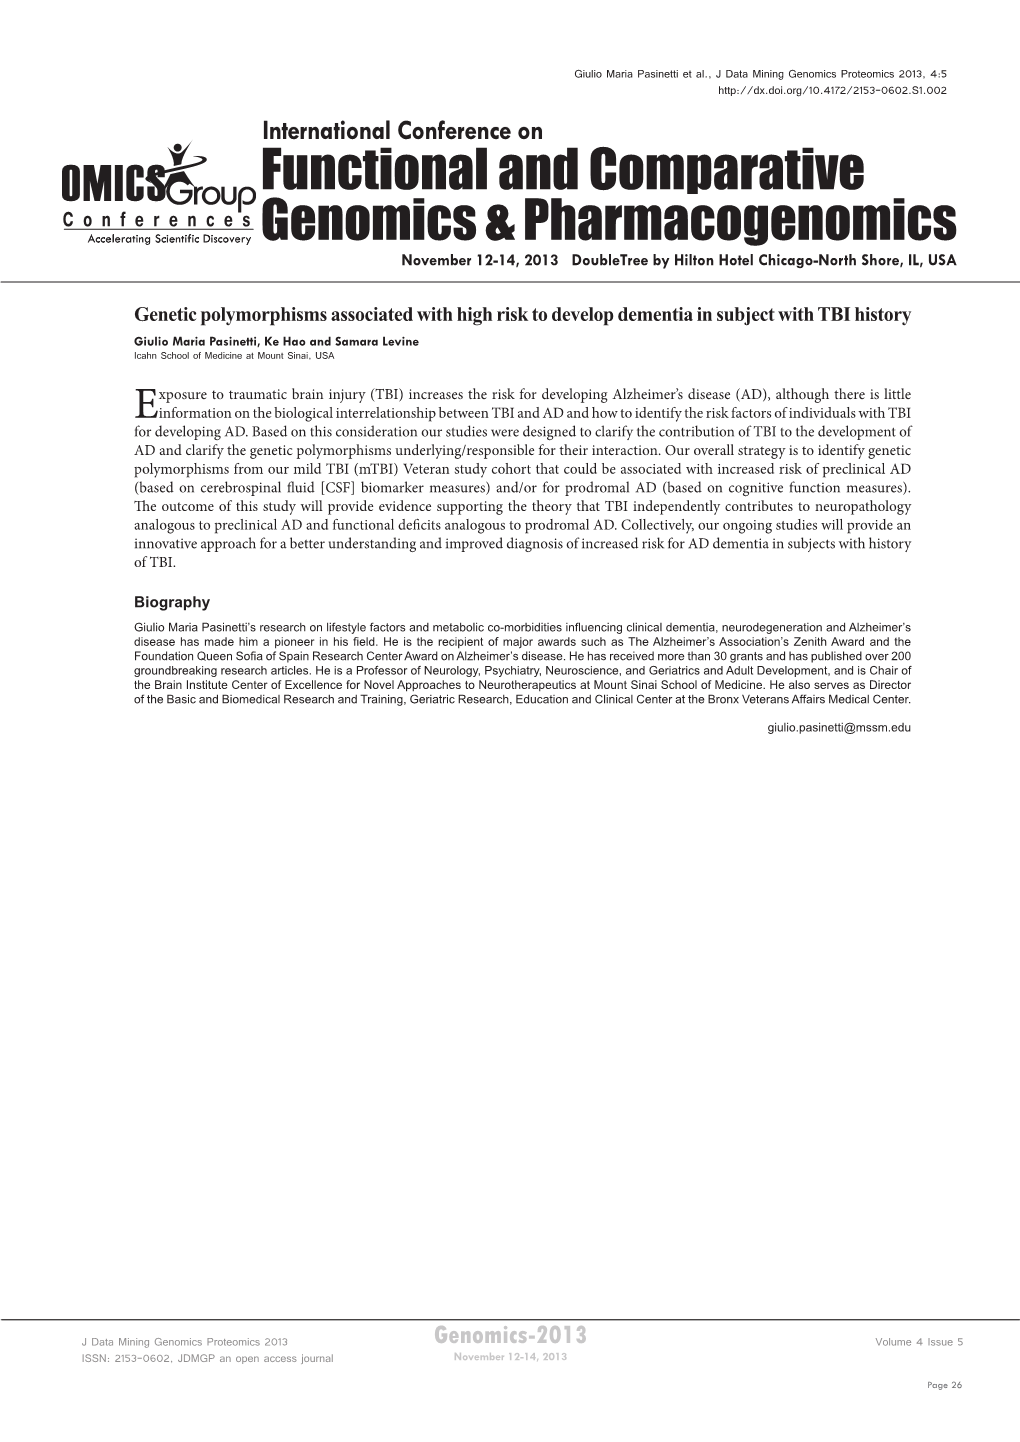 Functional and Comparative Genomics & Pharmacogenomics